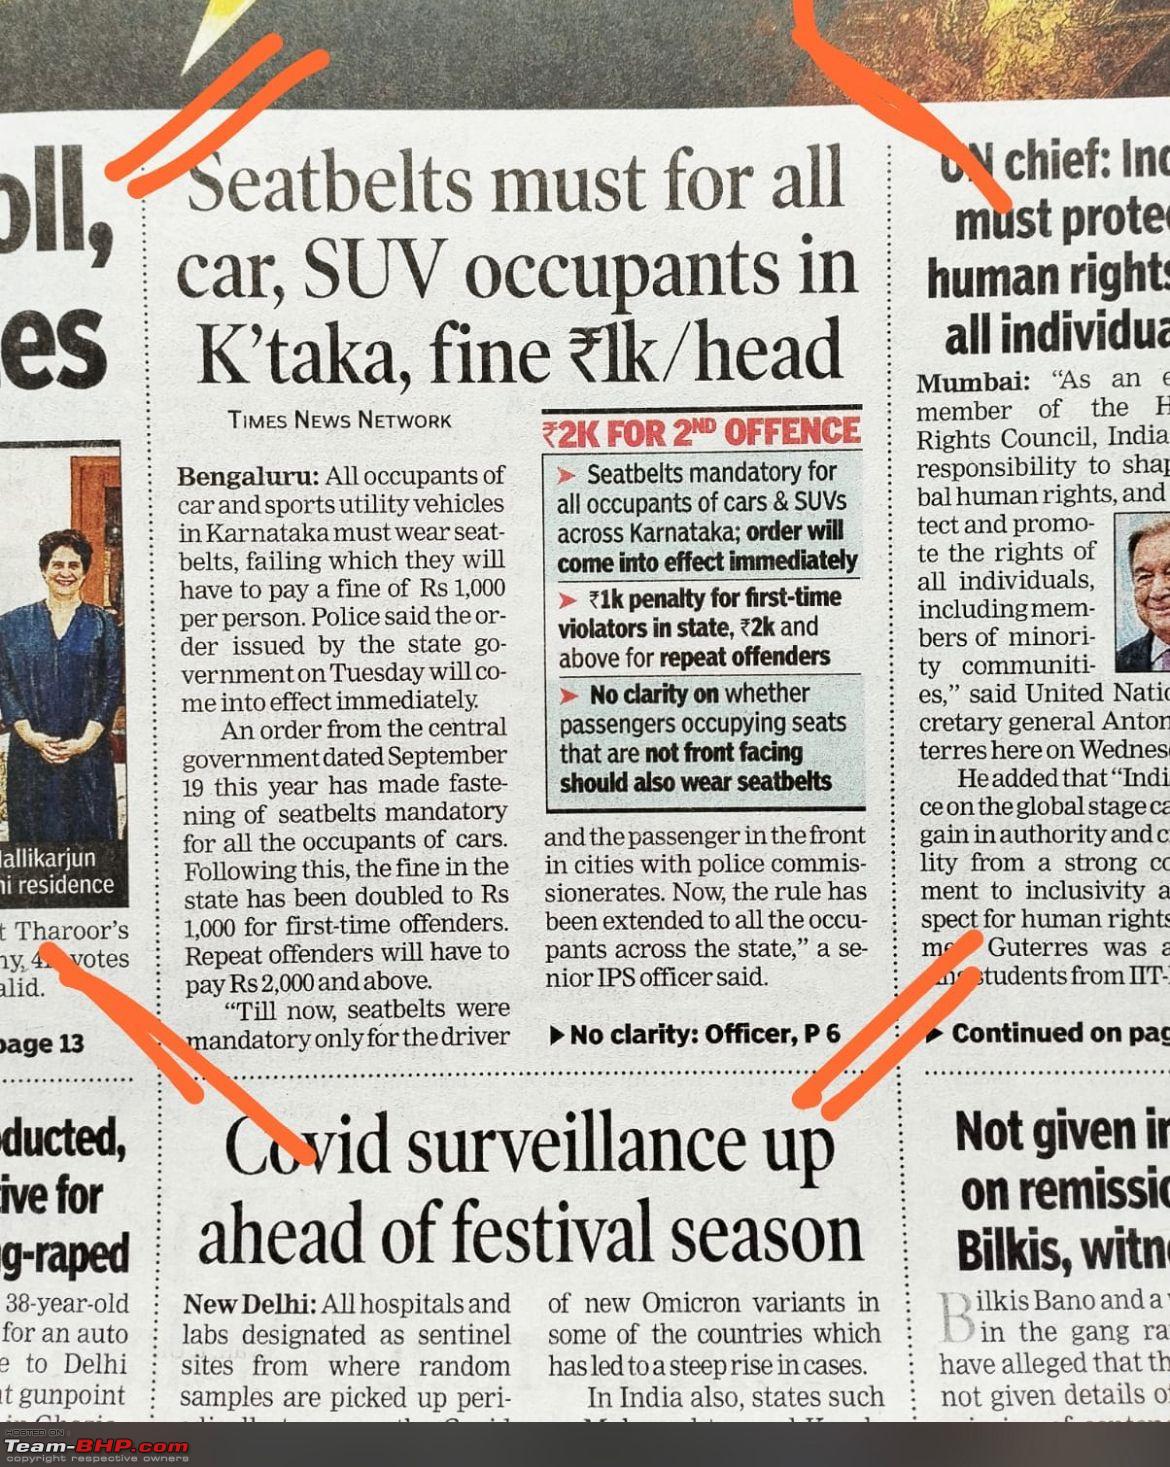 Karnataka makes seat belts compulsory for all passengers